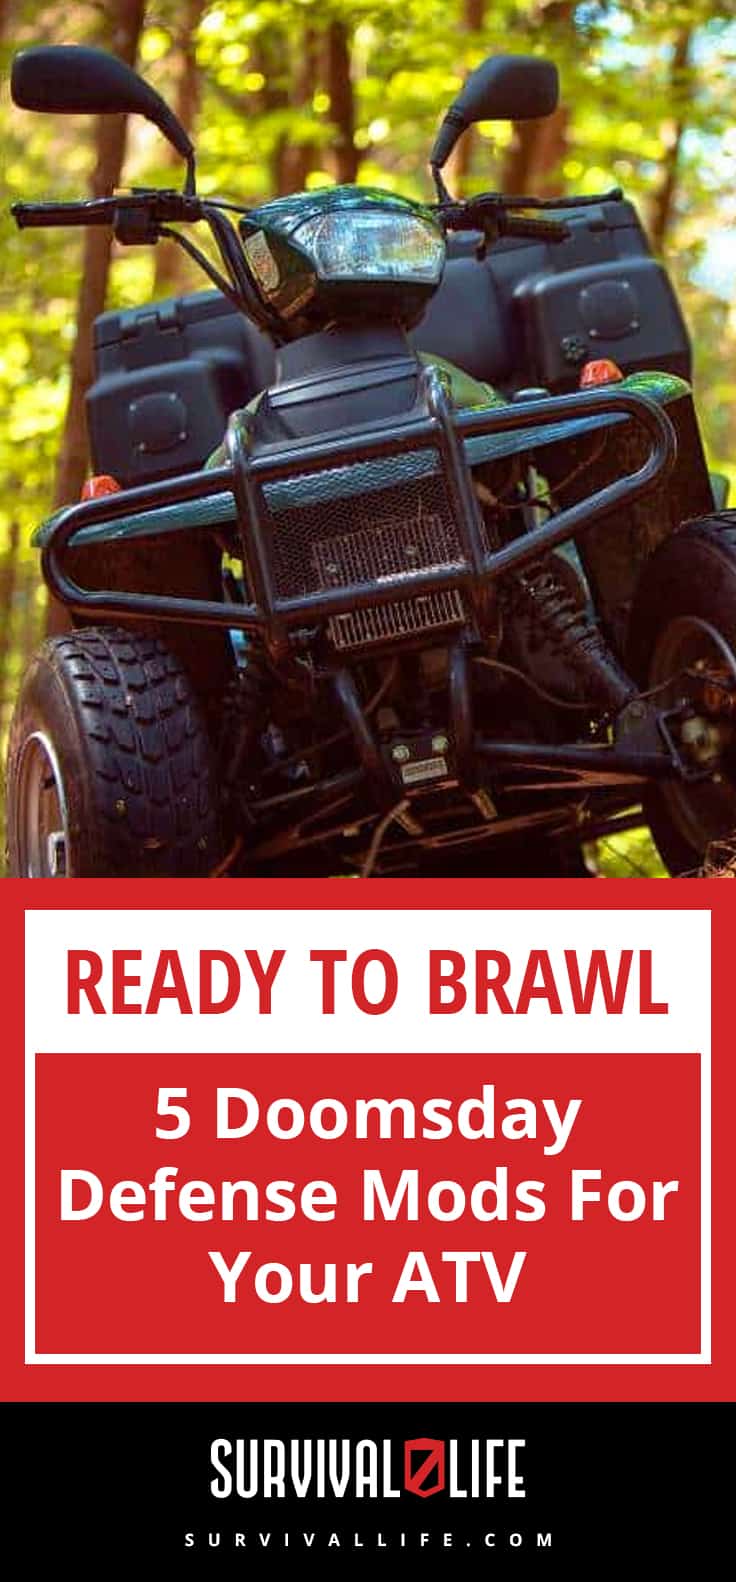 Ready To Brawl | 5 Doomsday Defense Mods For Your ATV